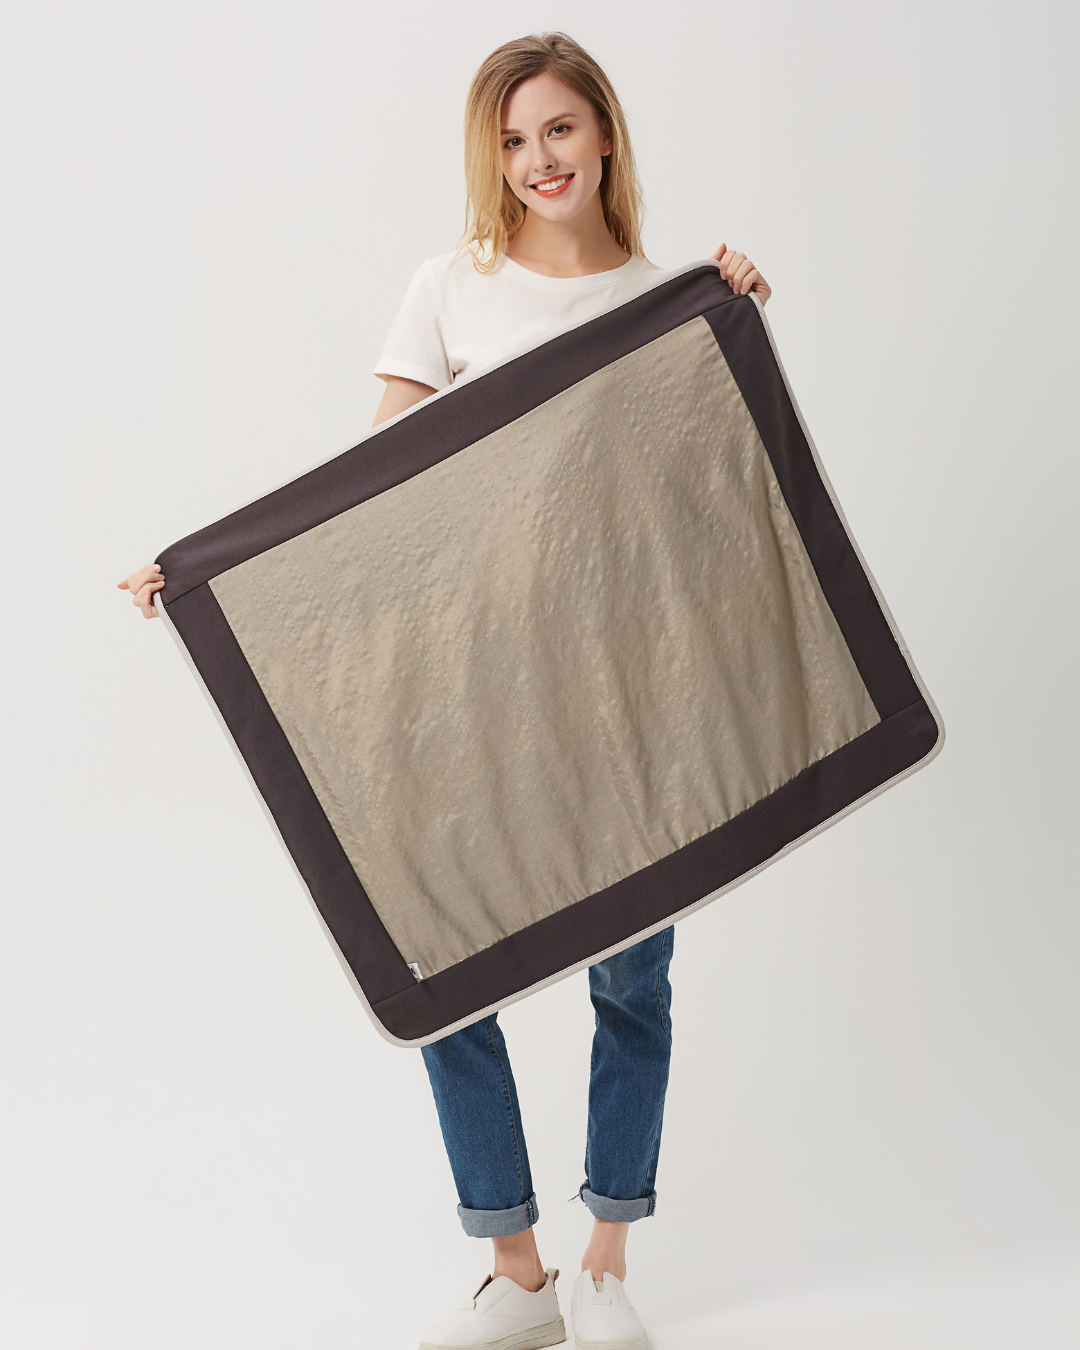 Faraday Blanket With Pocket EMF Protective – Smart & Safe Solutions